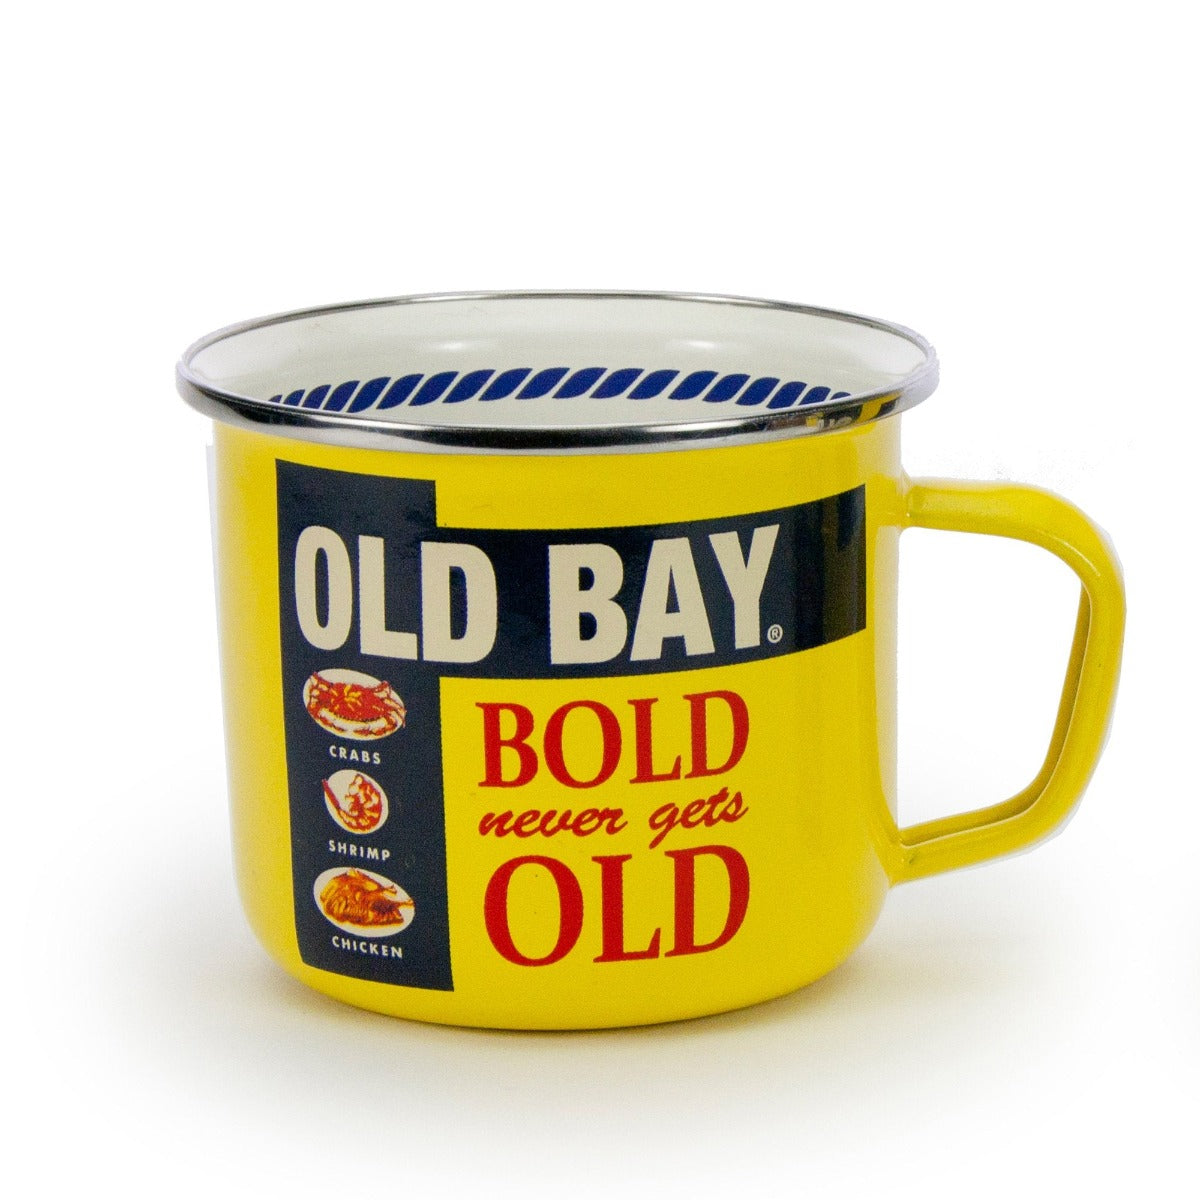 Old Bay Grande Mug- A great soup mug